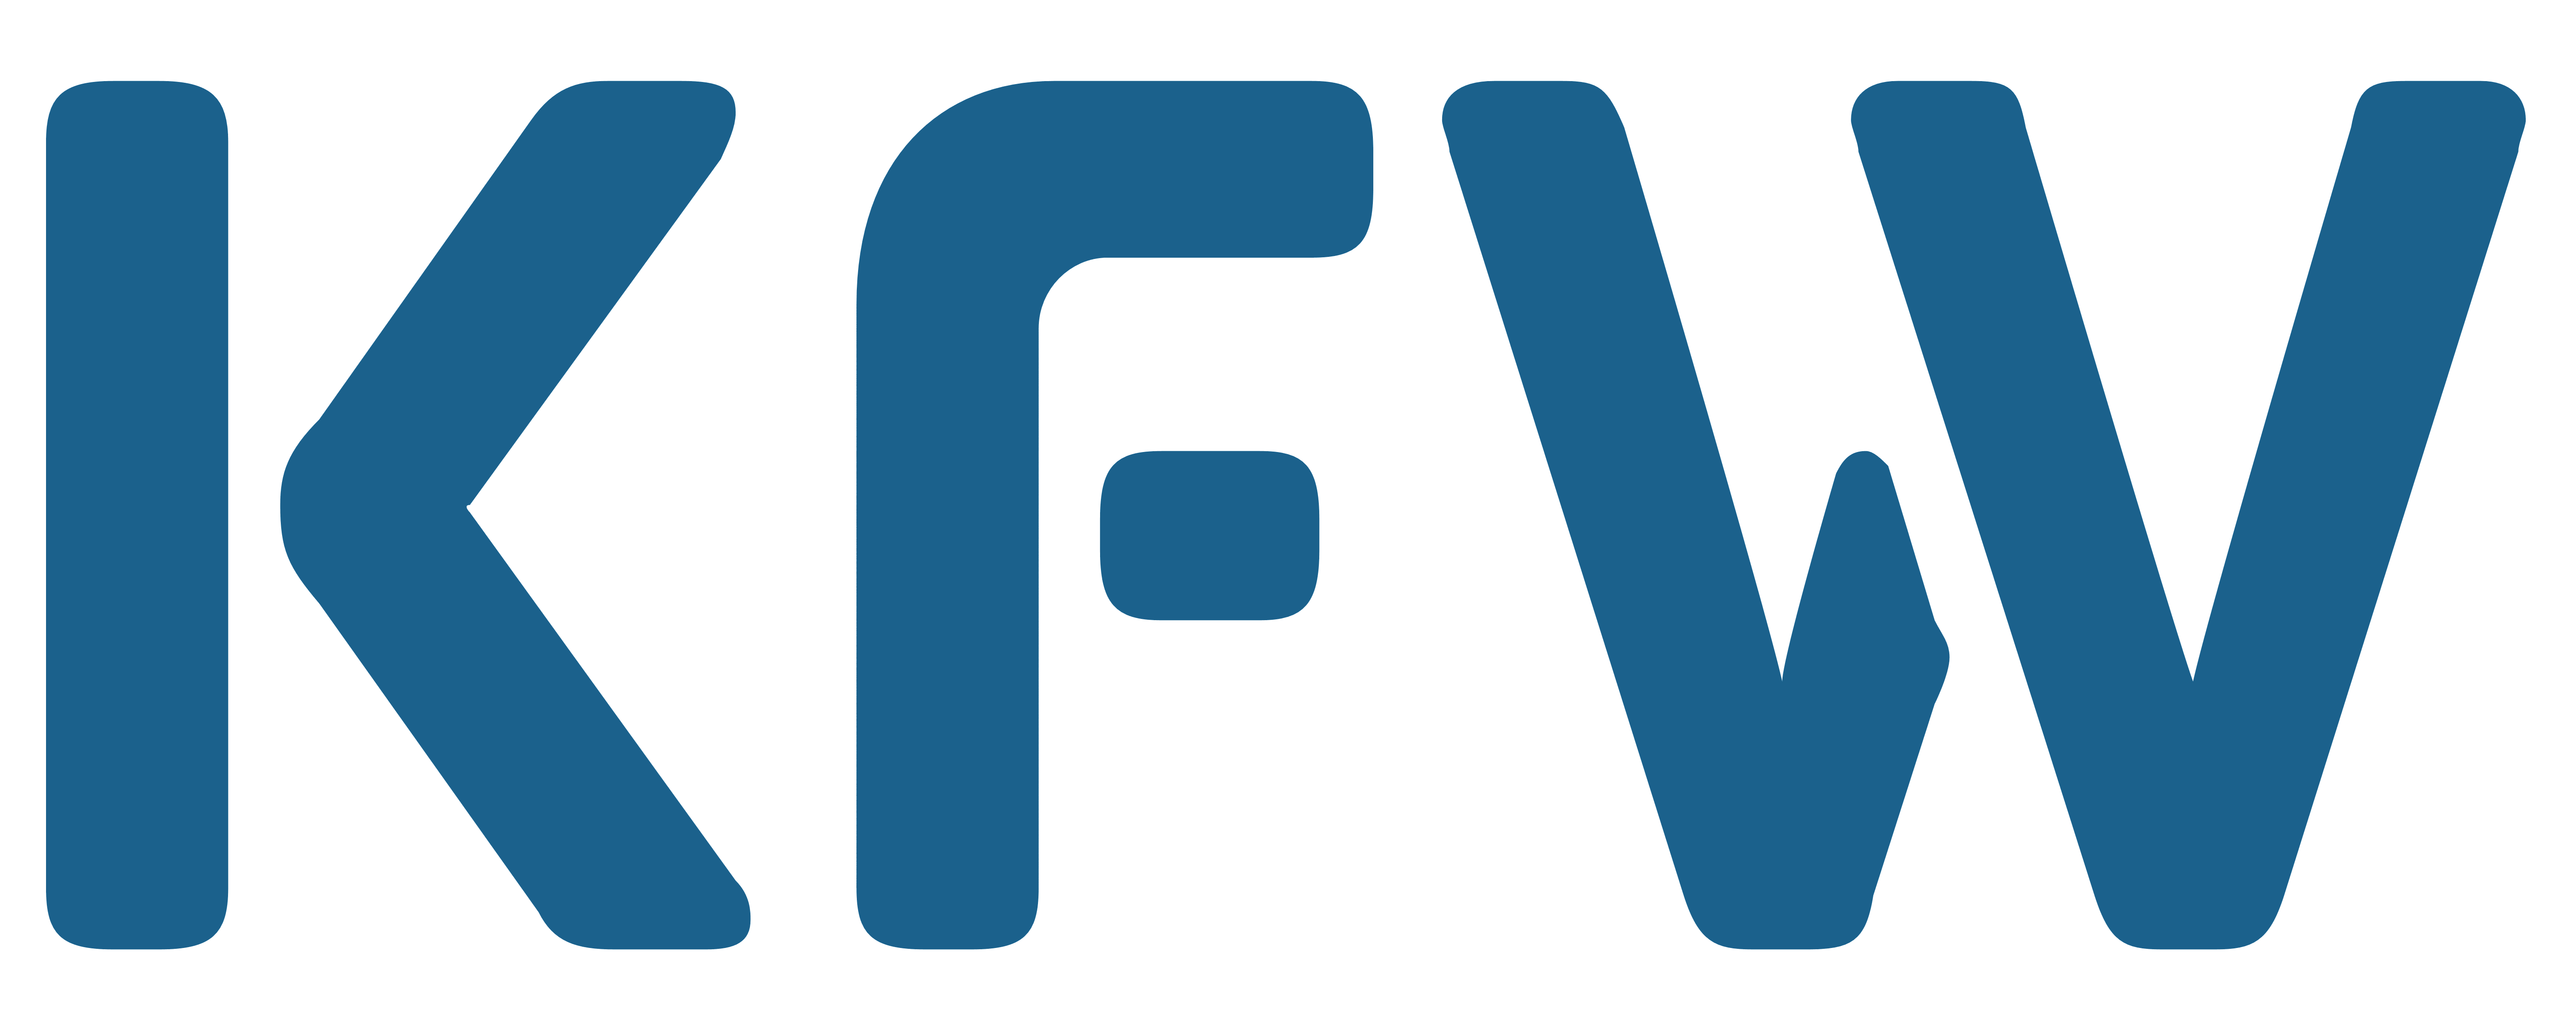 KfW logo, logotype